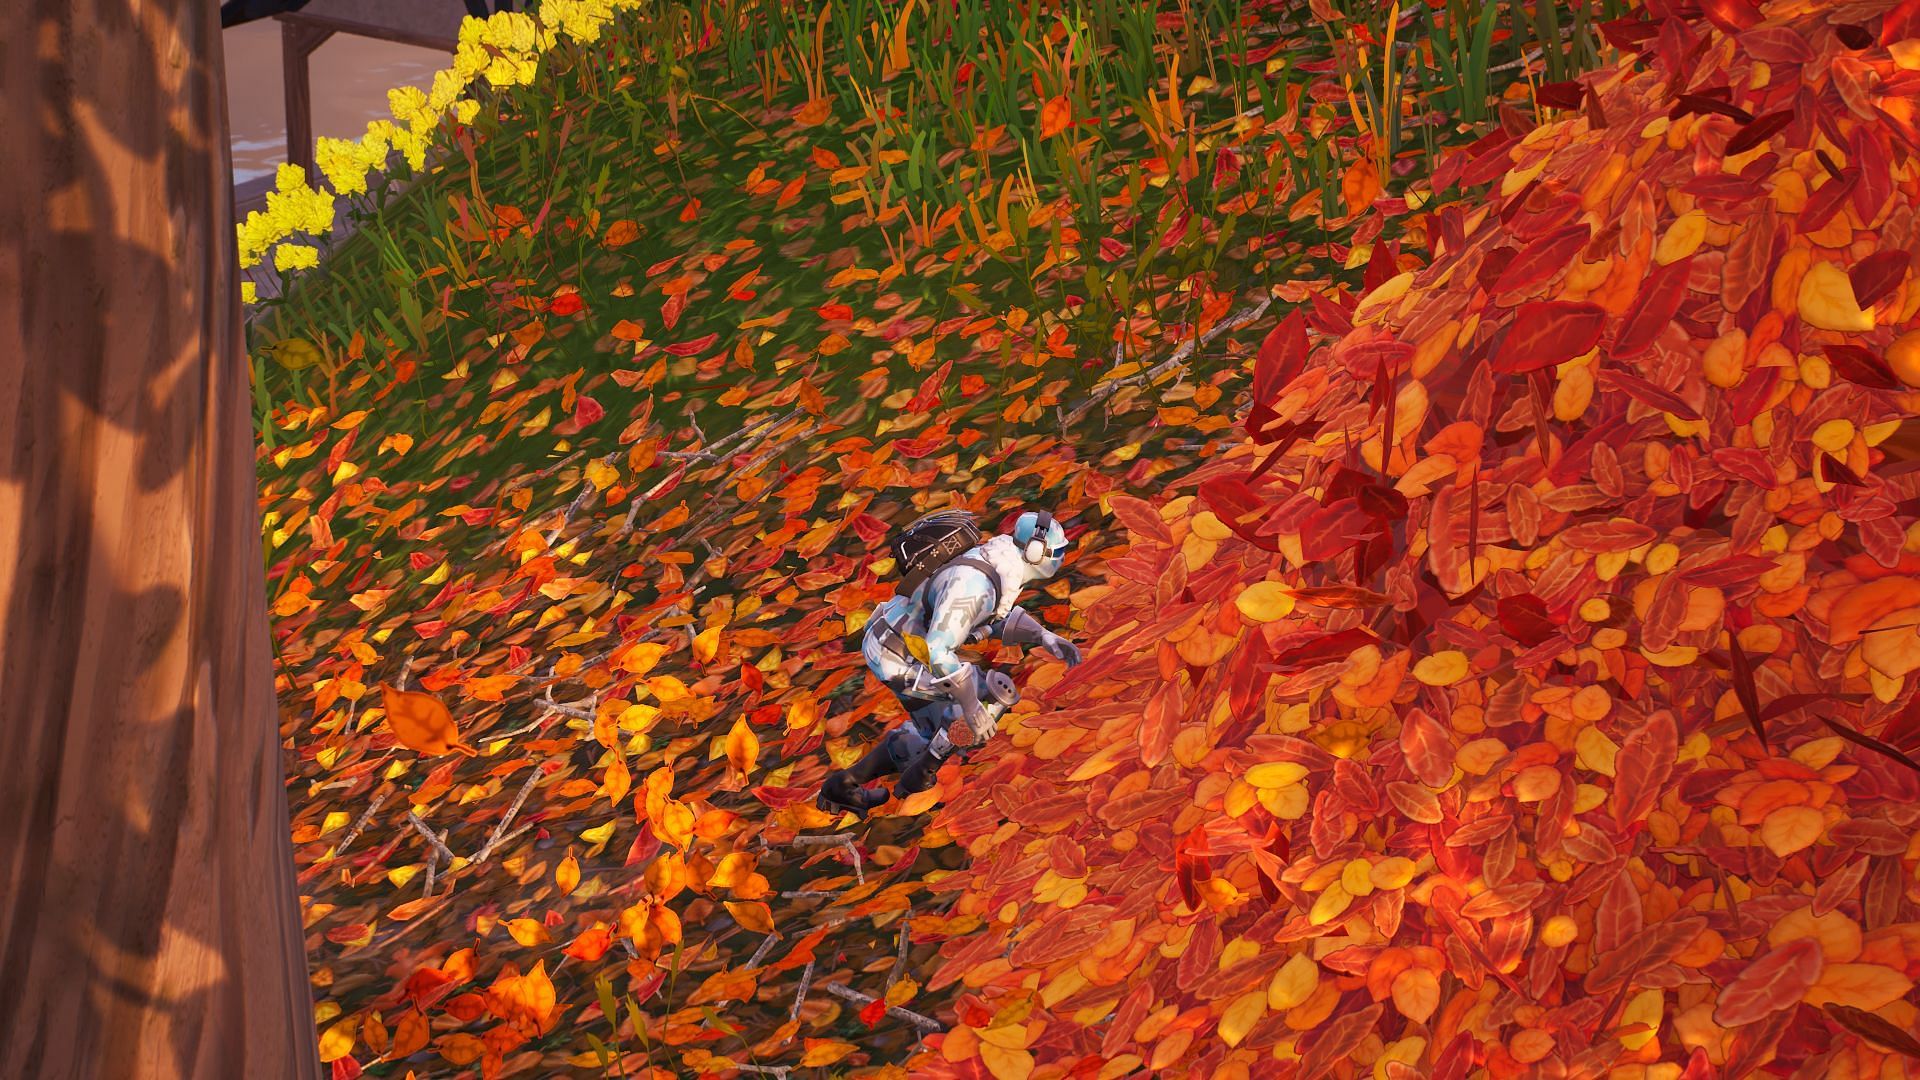 Leaf piles are good hiding spots in Fortnite Chapter 4 (Image via Epic Games/Fortnite)